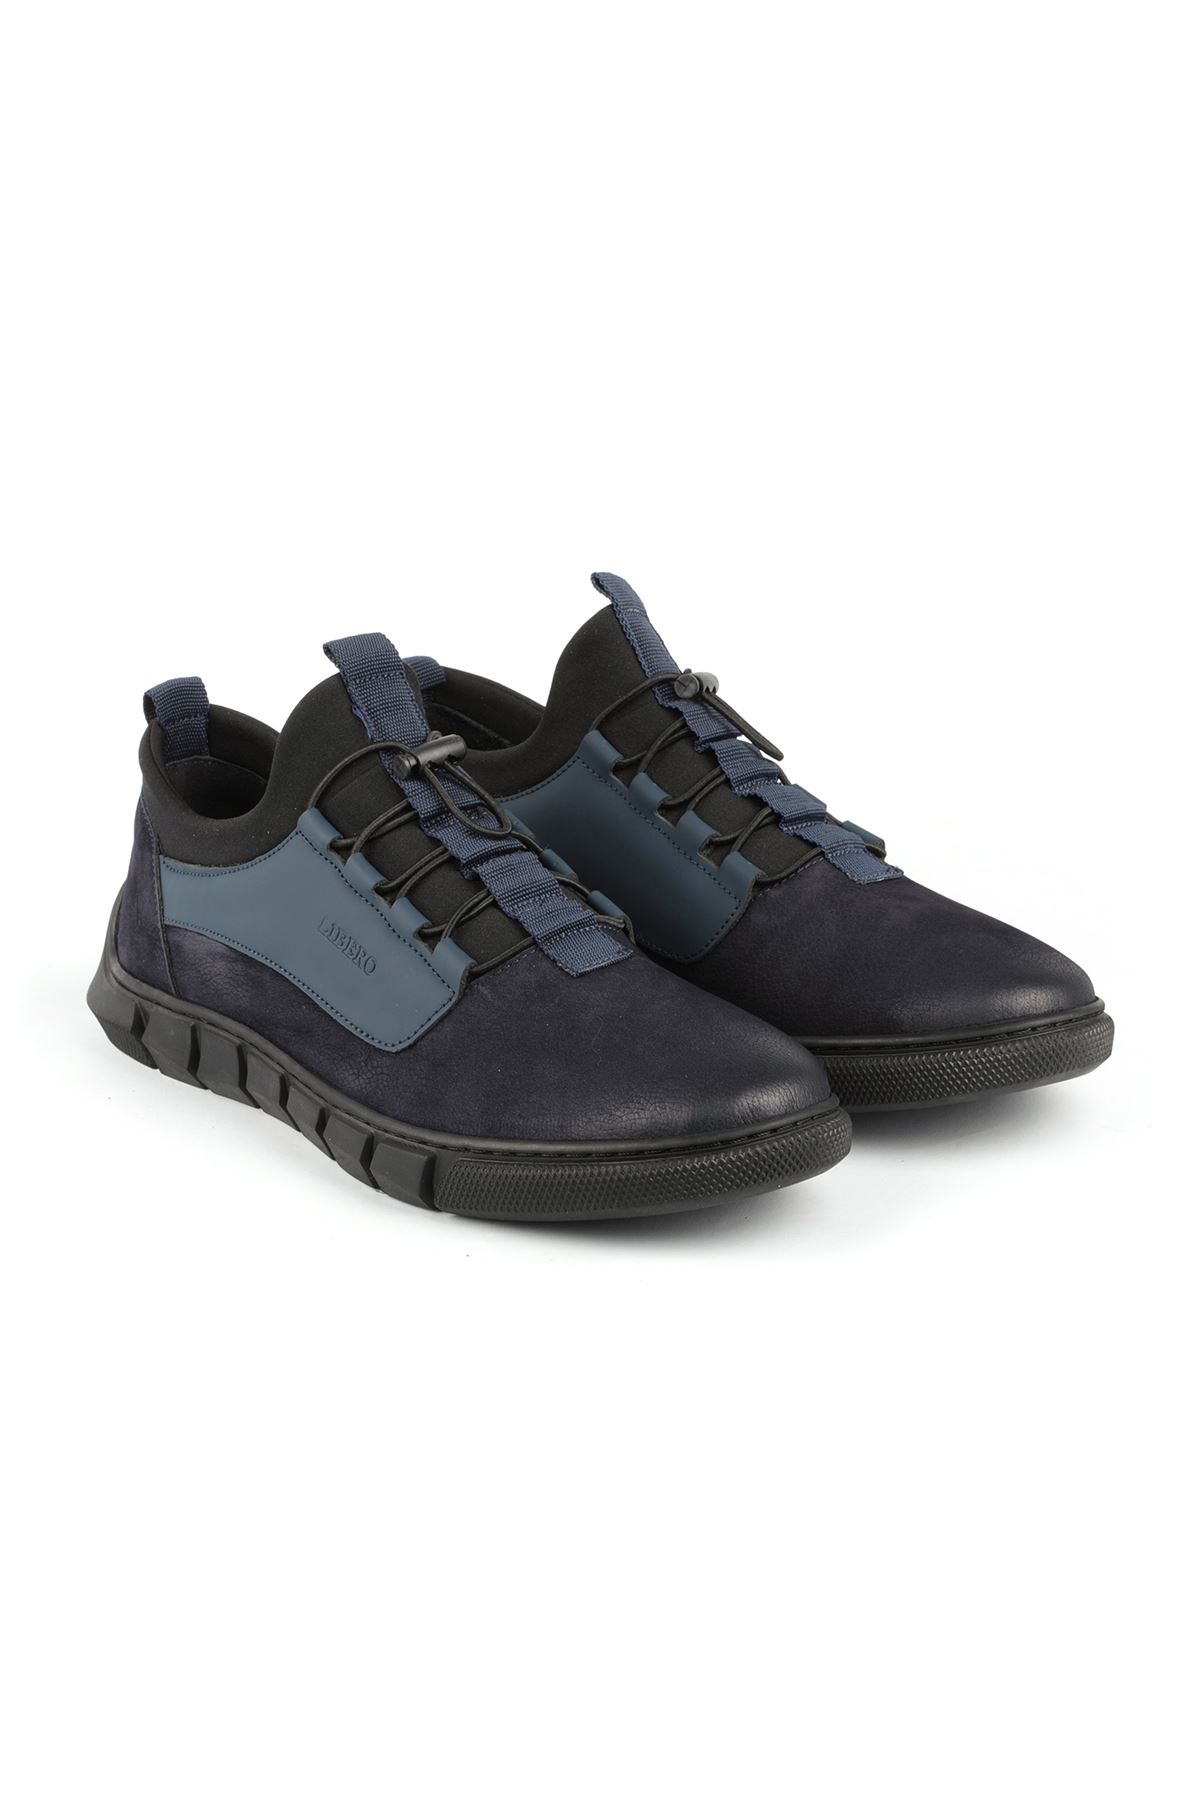 Libero L3589 Navy Blue Sport Shoes